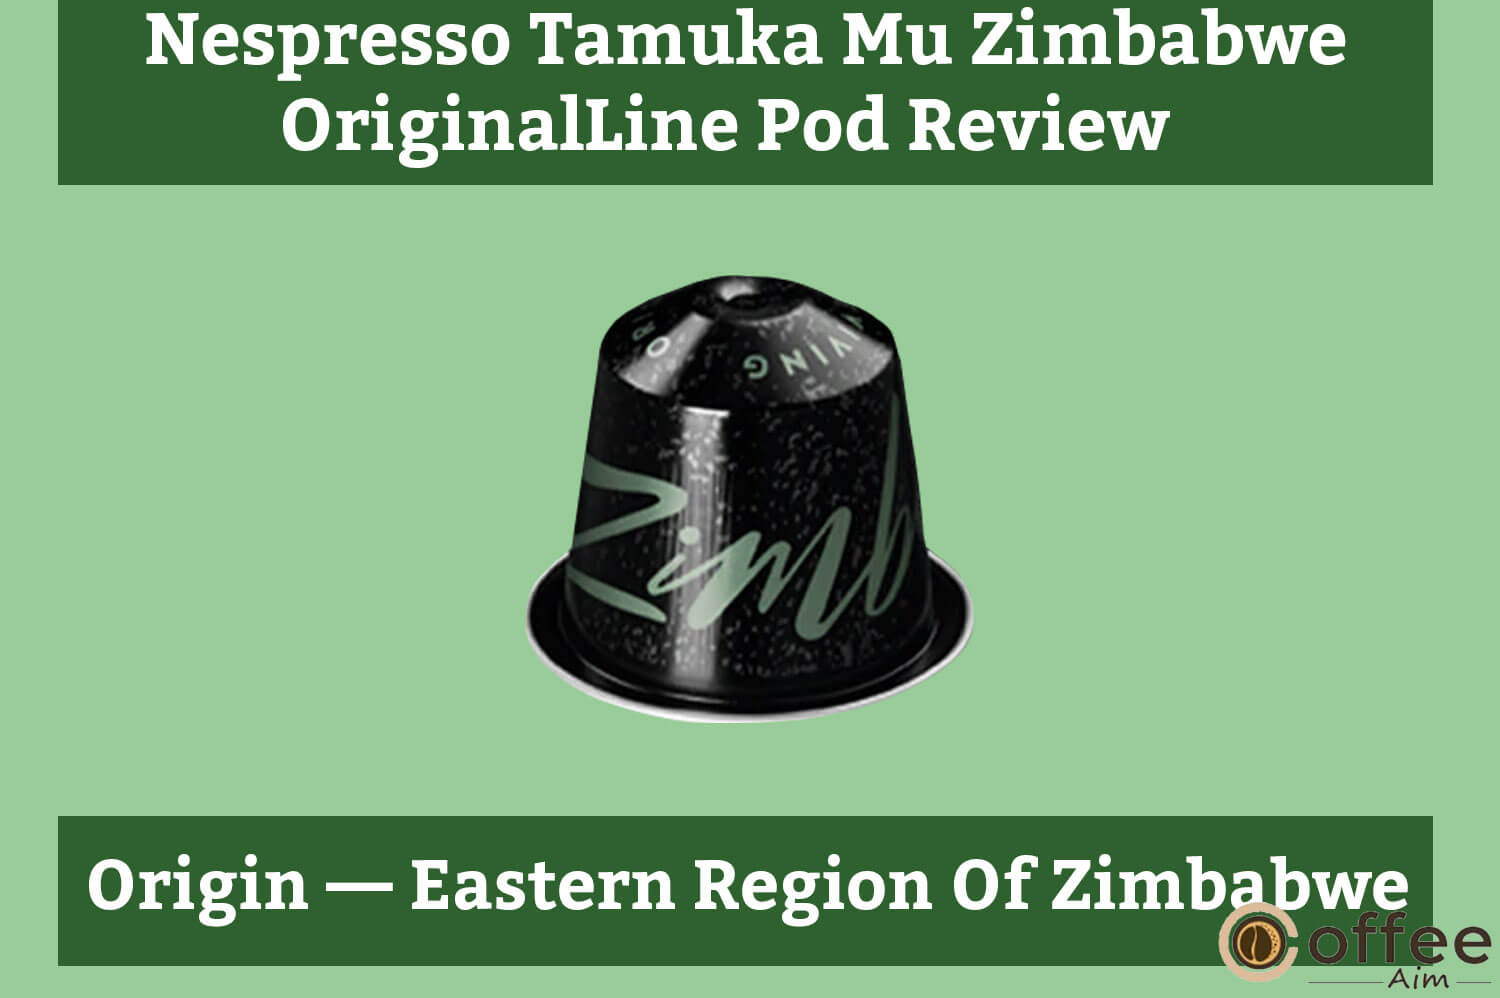 The image depicts the origin of the "Nespresso Tamuka Mu Zimbabwe OriginalLine Pod," a focus in the review article.